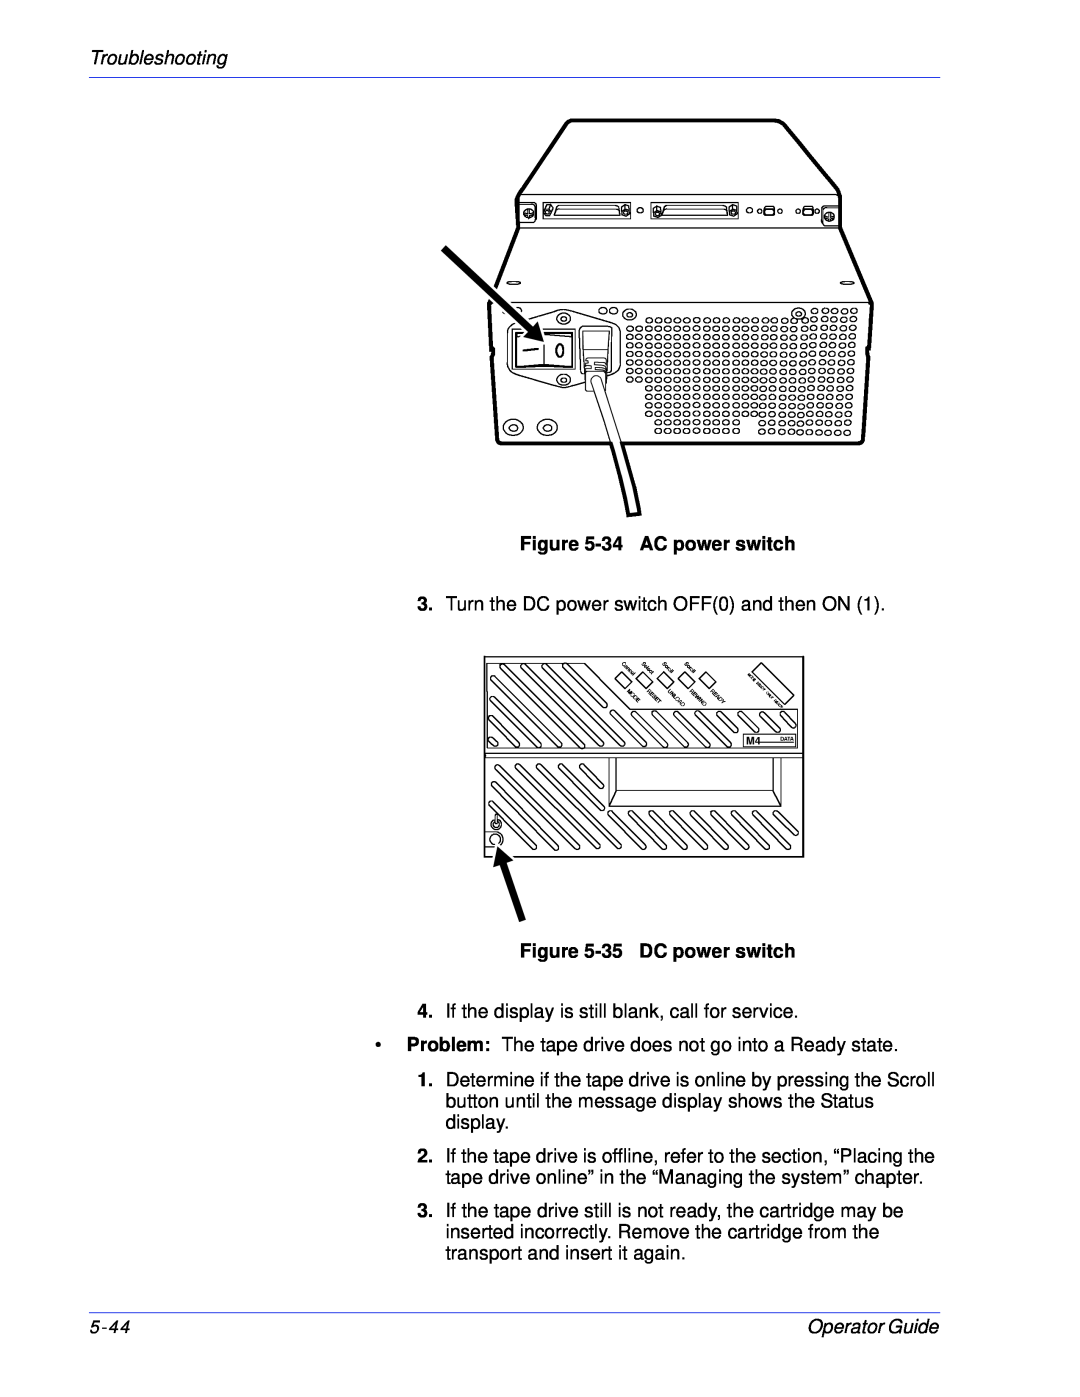 Xerox 100, 180 EPS manual Troubleshooting, 34AC power switch, 35DC power switch 